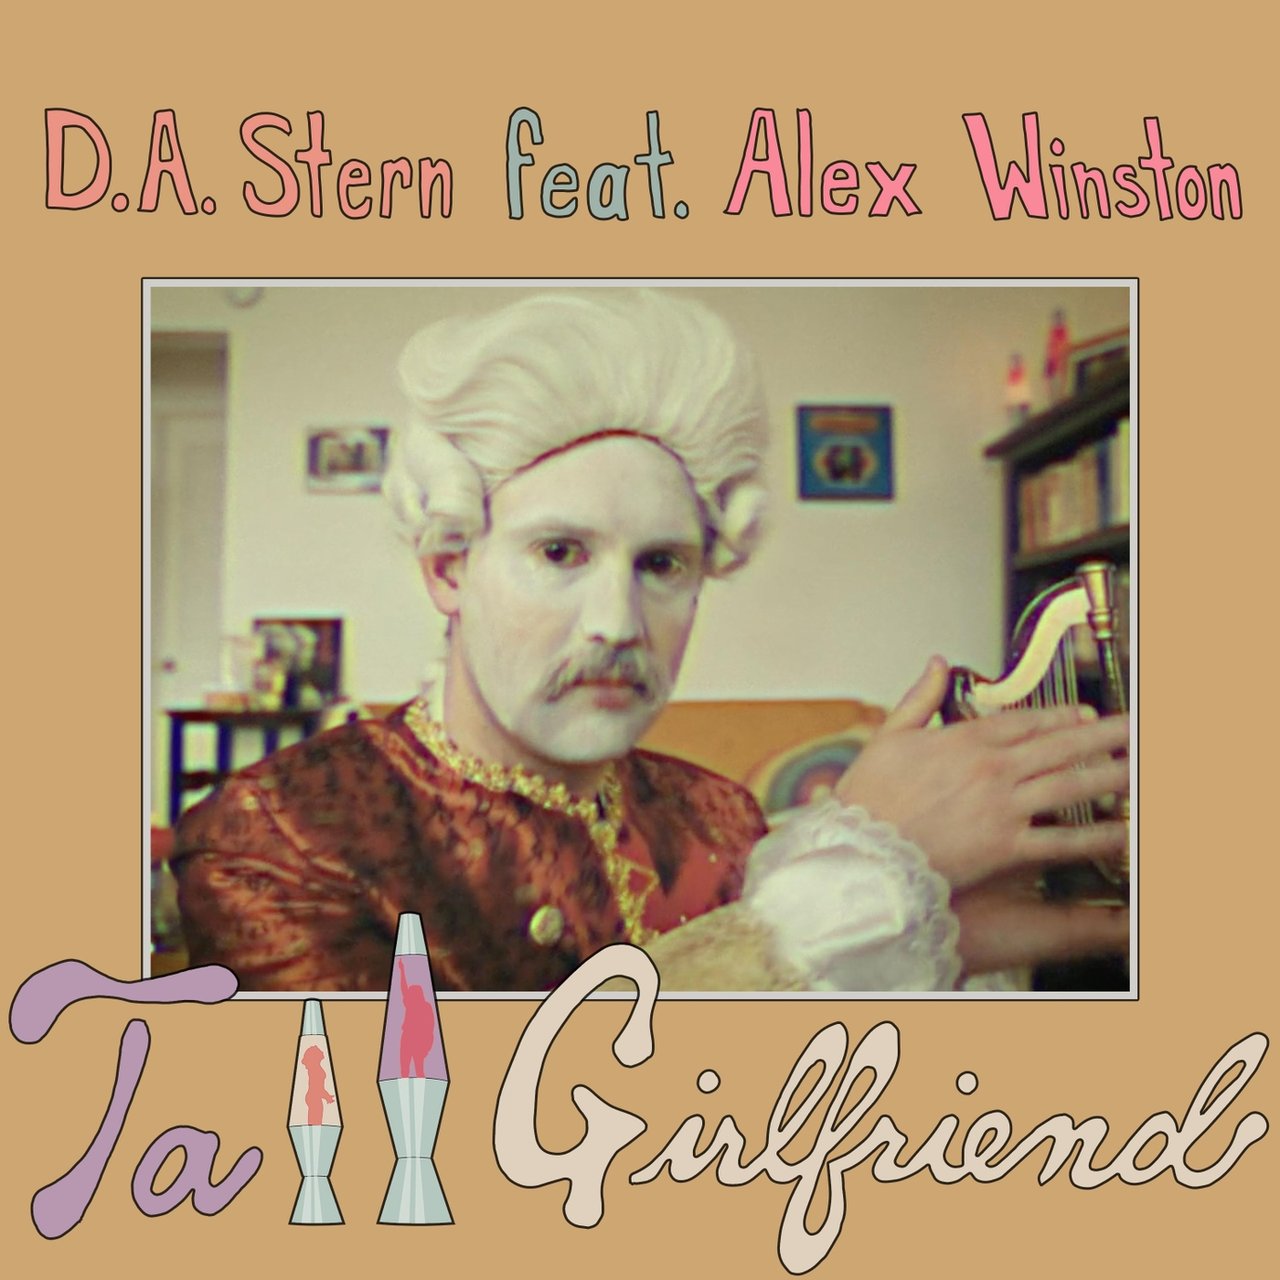 D. A. Stern featuring Alex Winston — Tall Girlfriend cover artwork